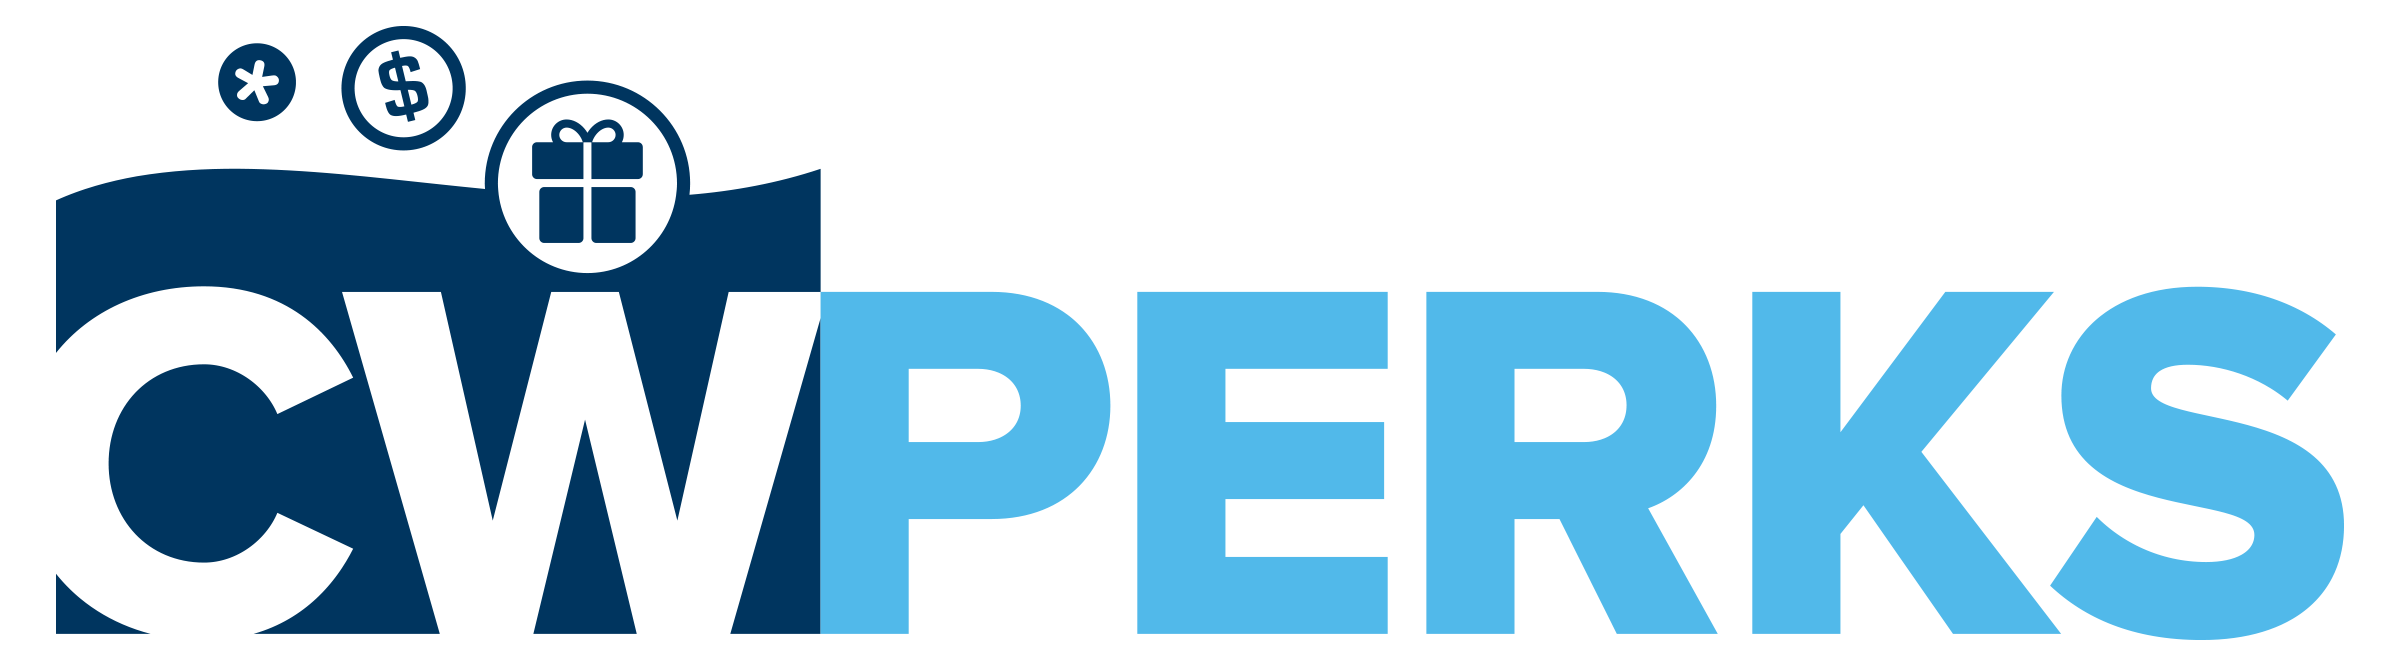 CWPERKS Logo